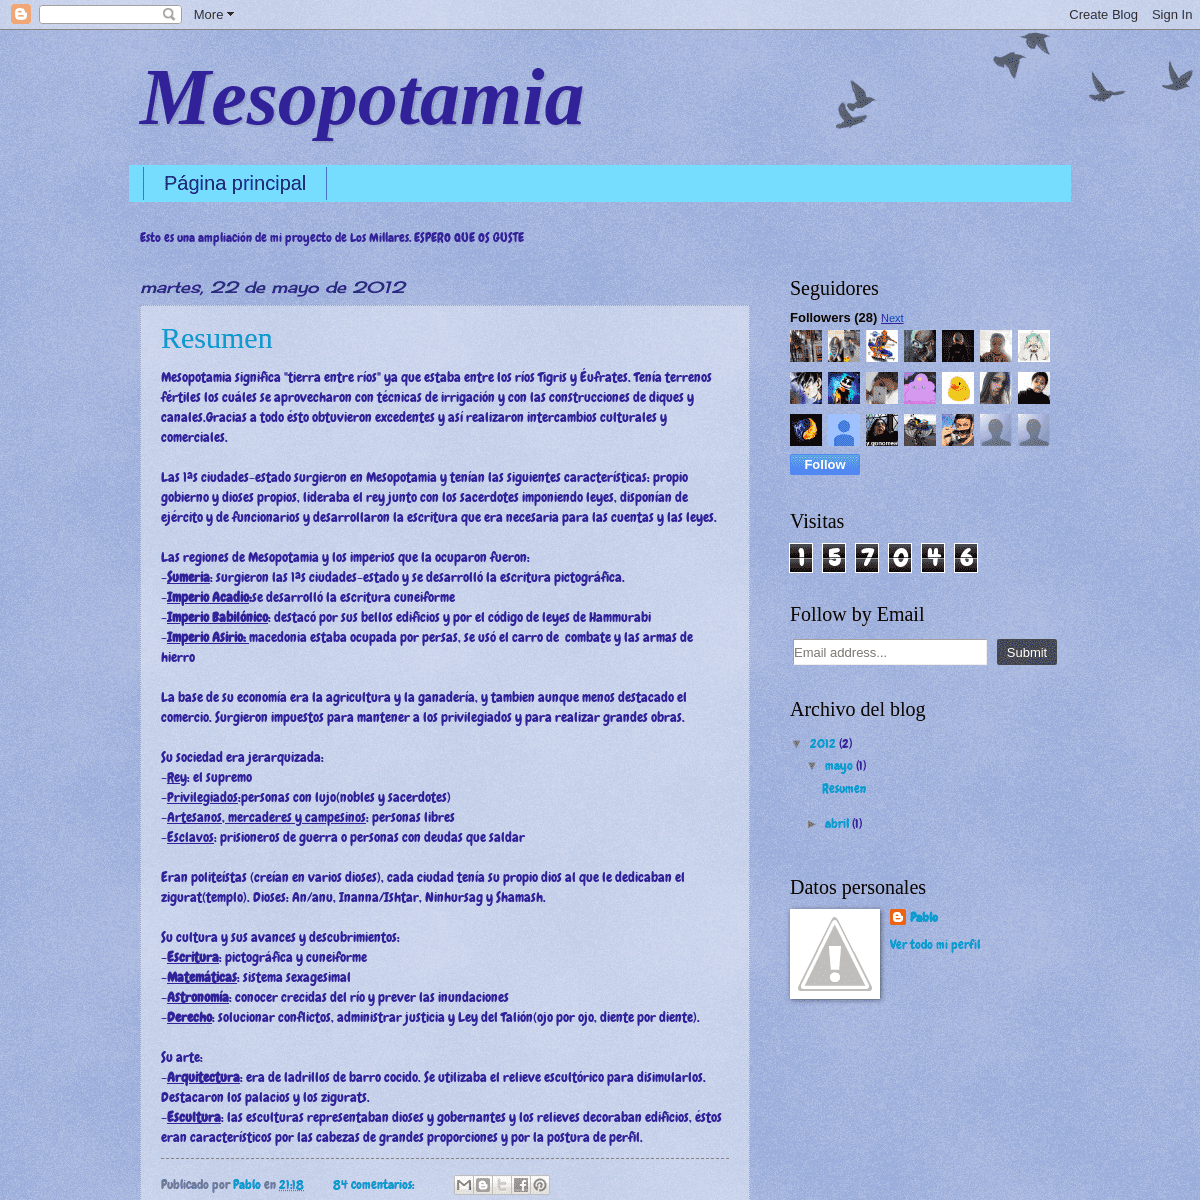 A complete backup of mesopotamia1b.blogspot.com